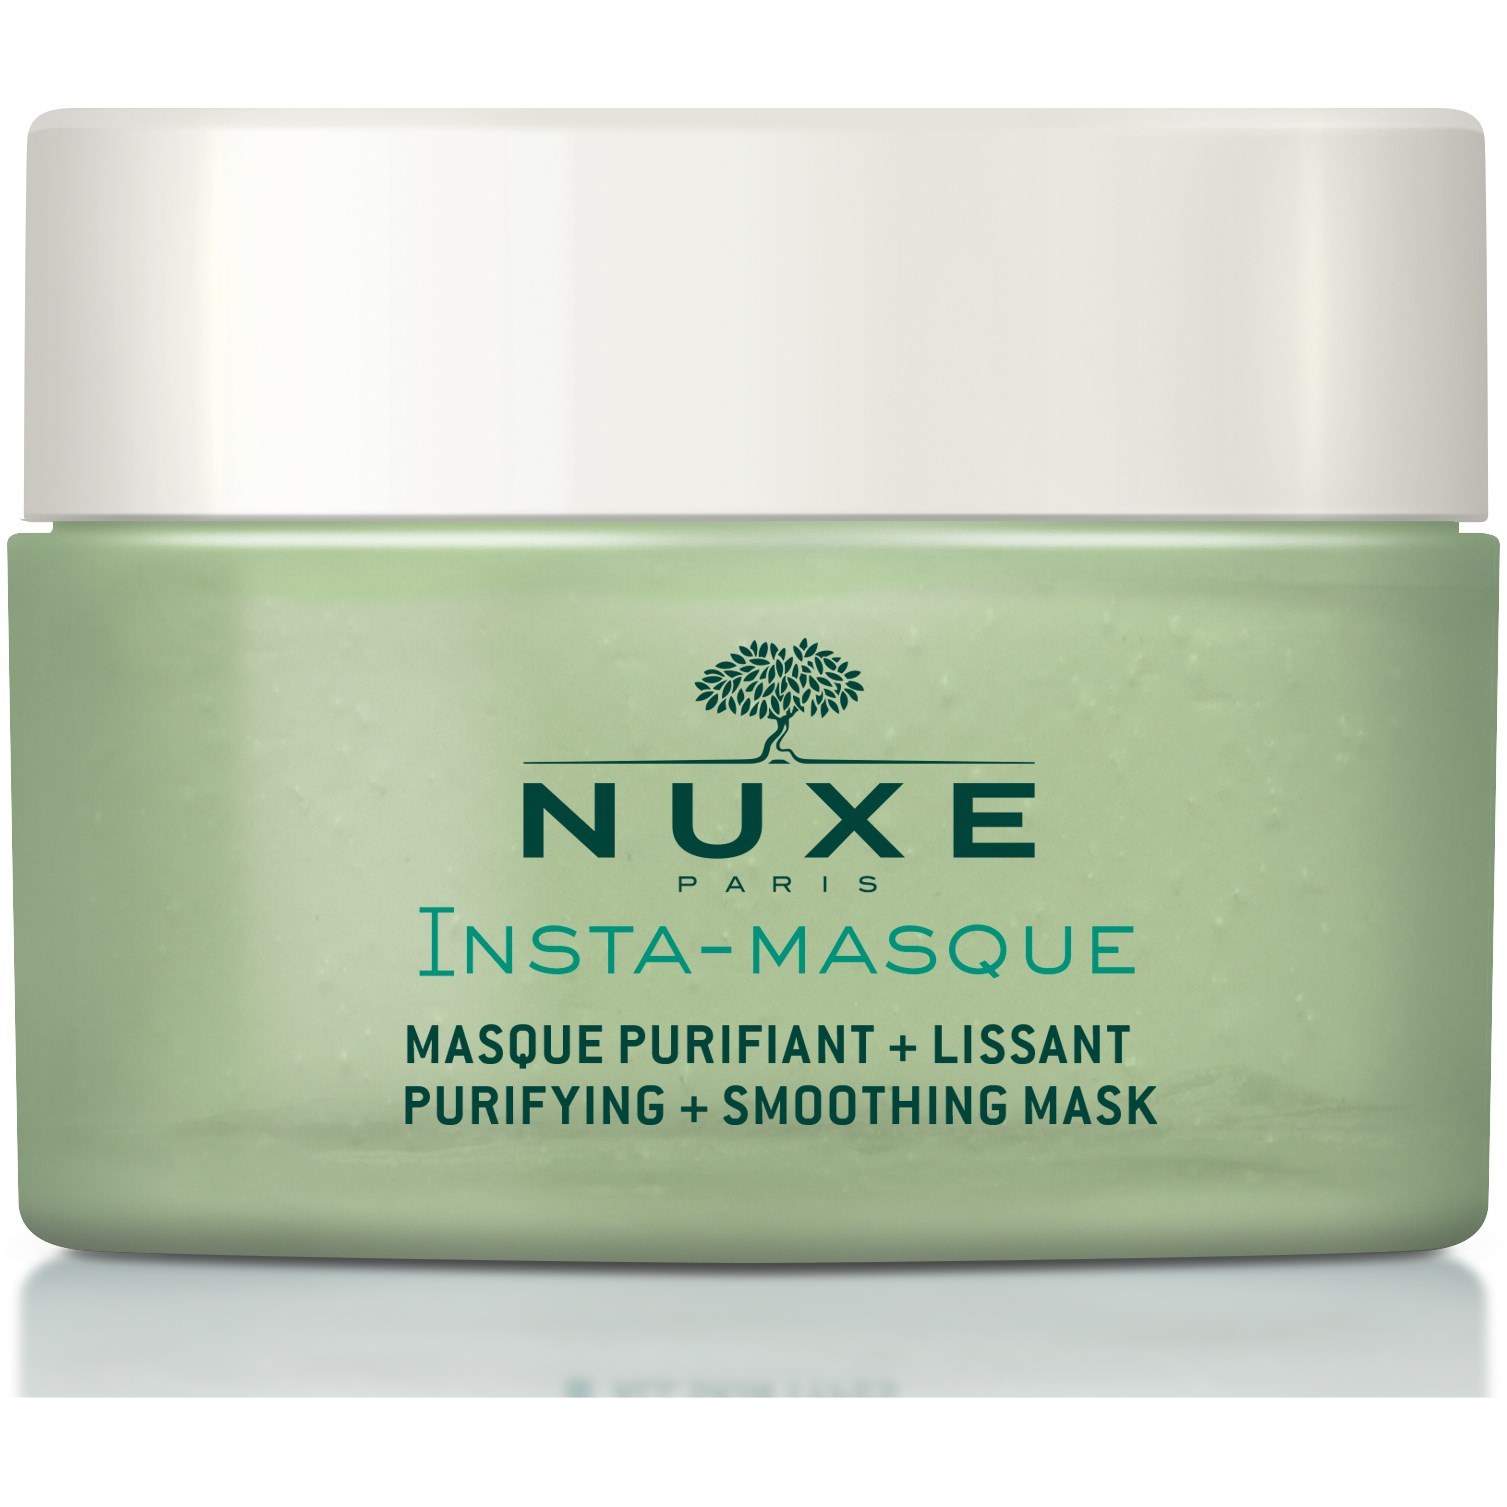 Nuxe Insta Masque Purifying Mask 50 ml